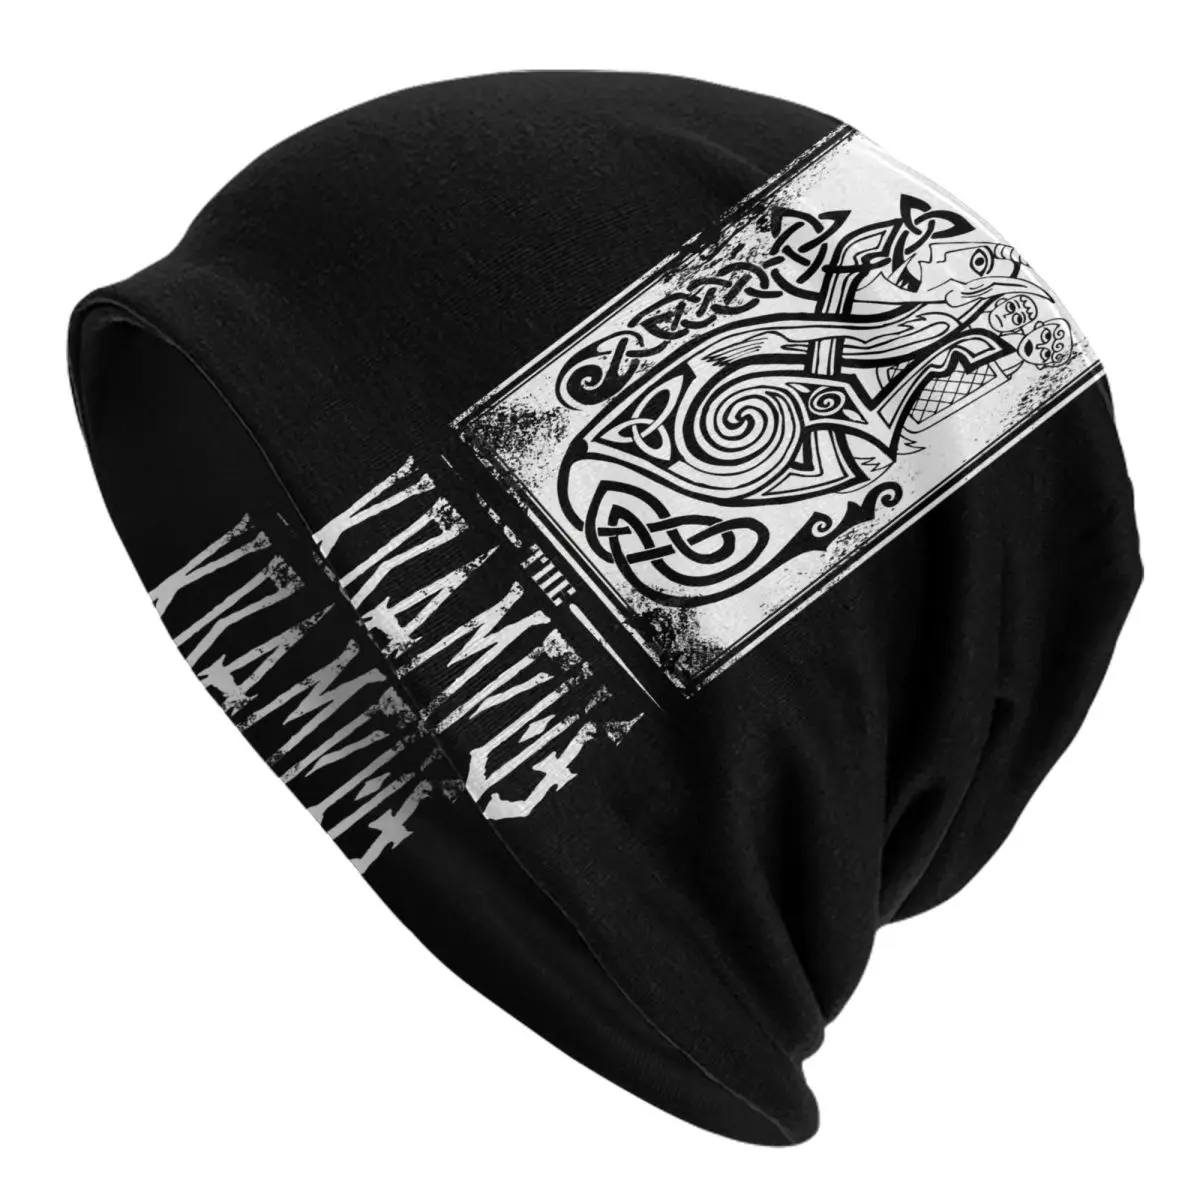 Esigns Keltic Krampus I Adult Knit Hat Men's Women's Keep warm winter knitted hat